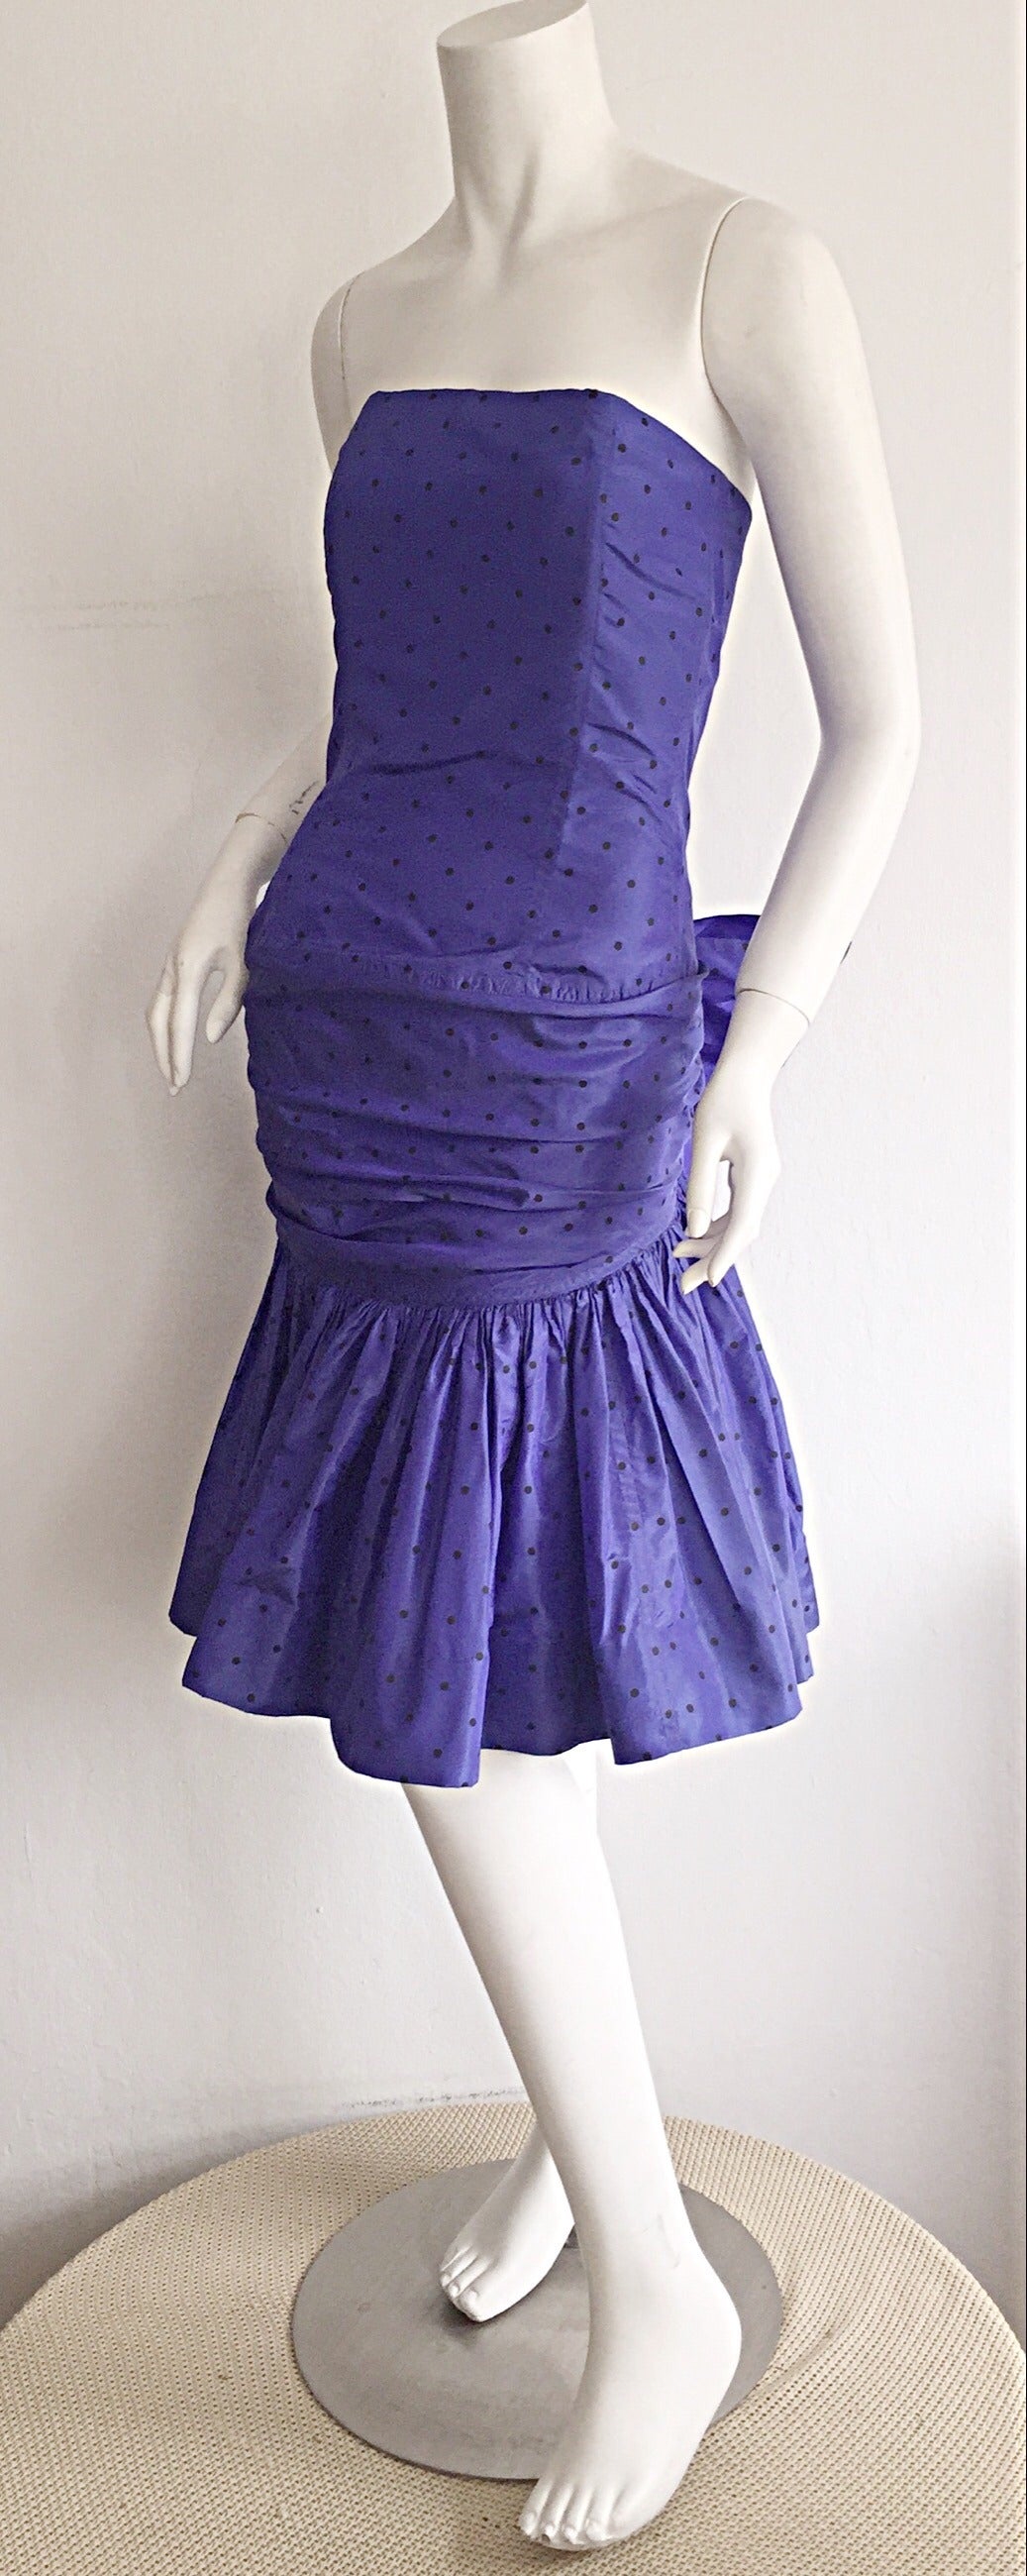 Incredible Vintage Angelo Tarlazzi Paris Royal Blue Polka Dot Avant Garde Dress For Sale 1